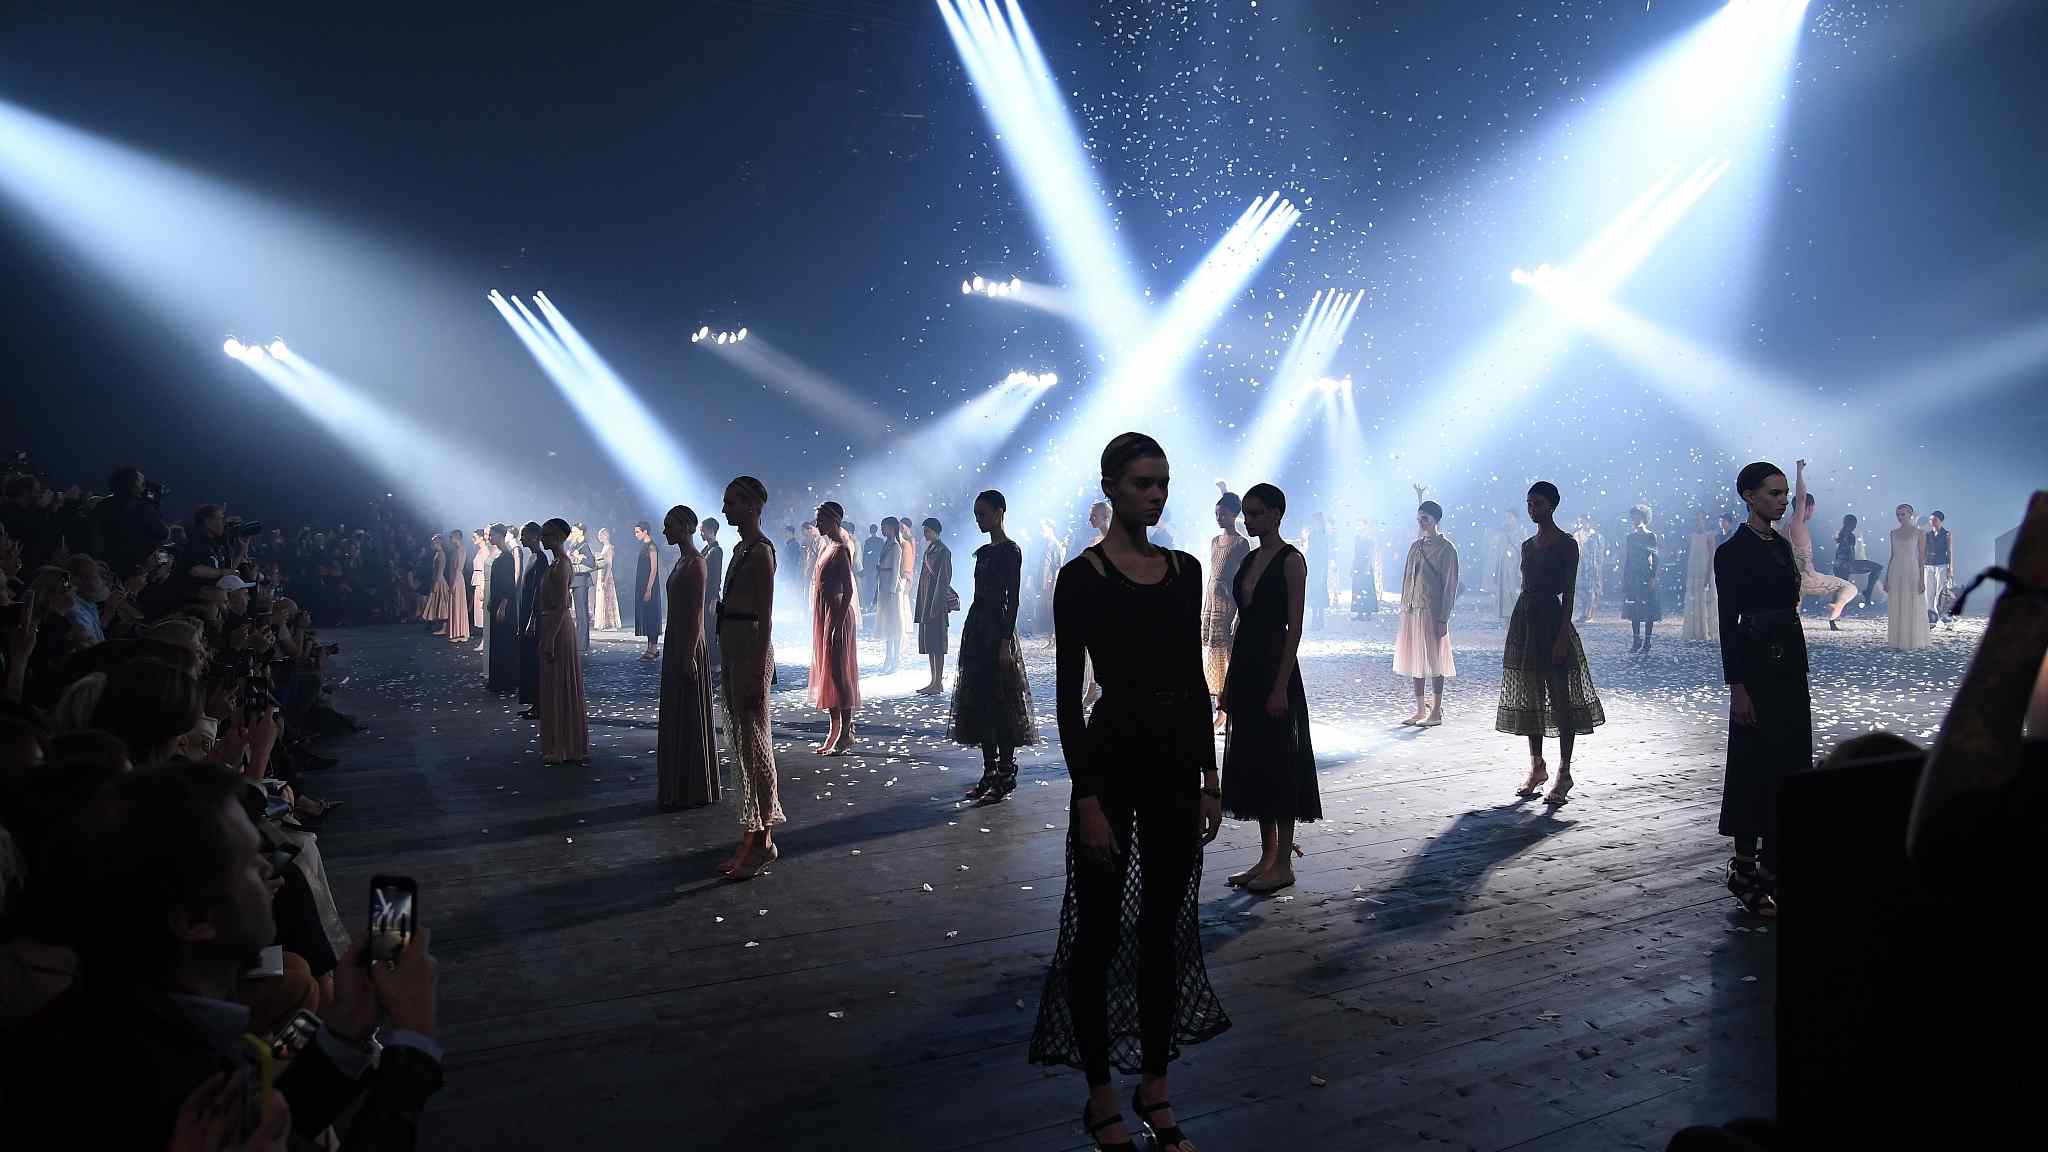 Paris Fashion Week kicks off with dance and theatricality - CGTN